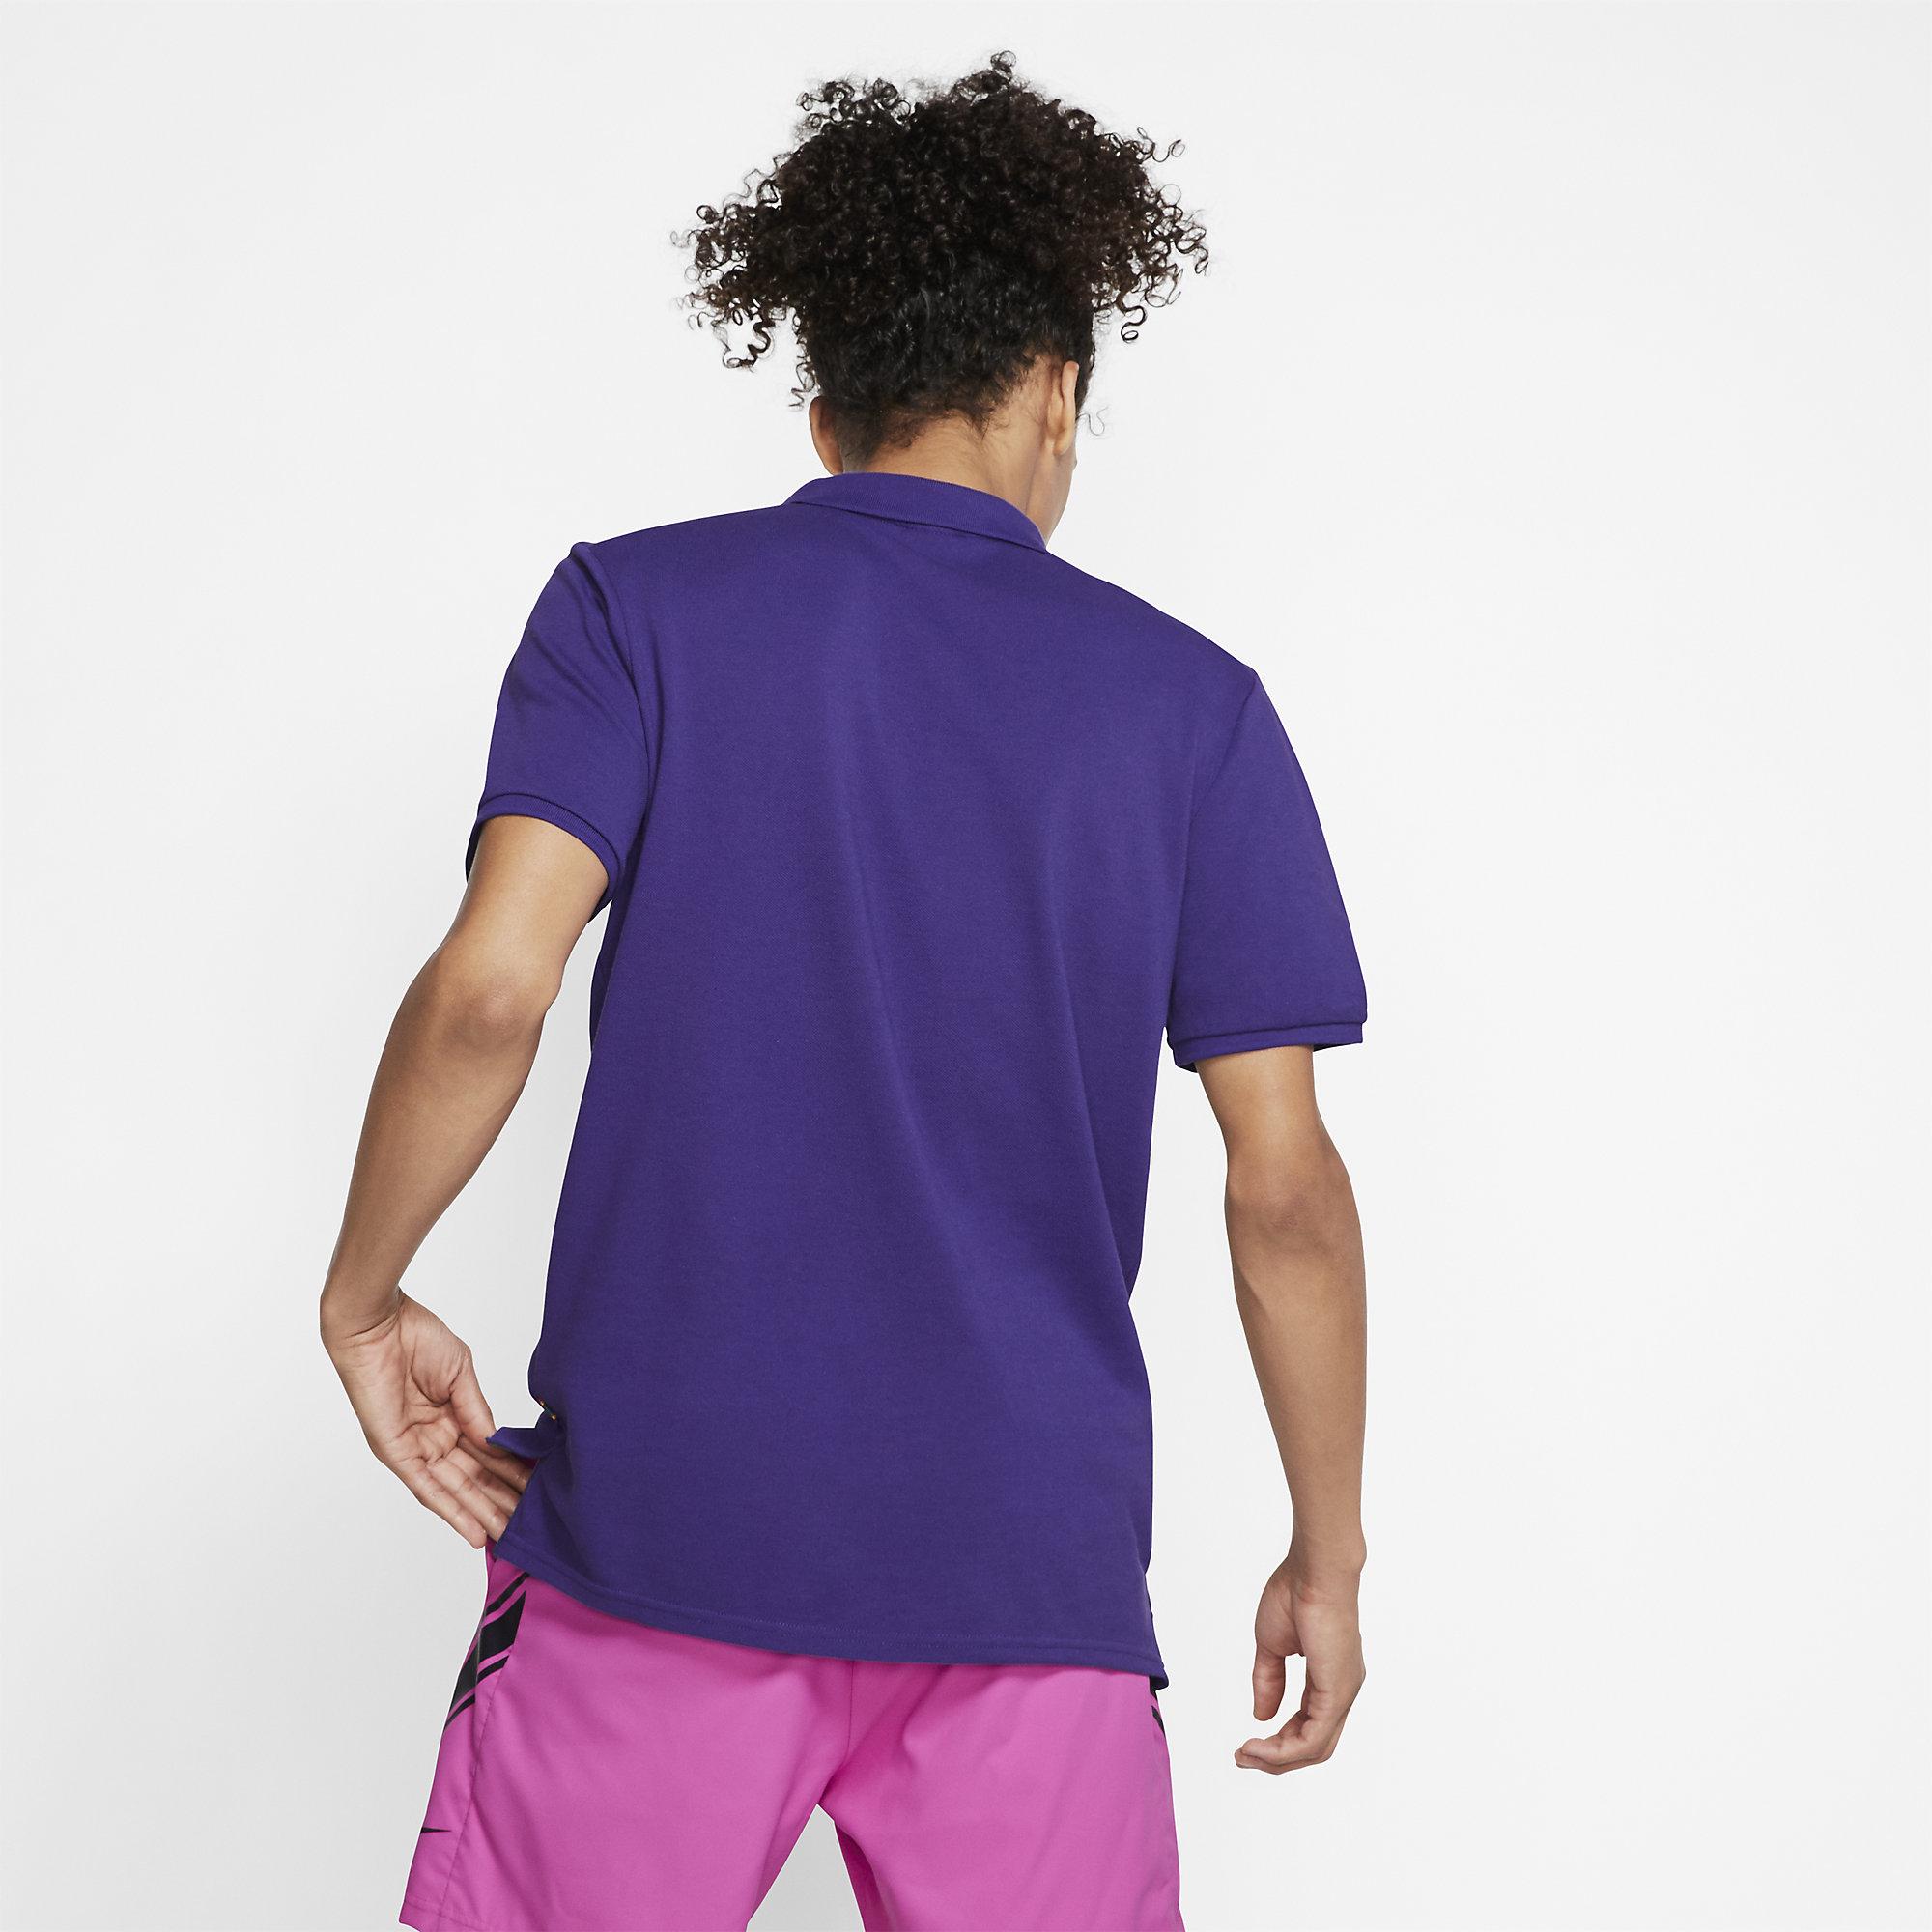 Nike Mens Heritage Tennis Polo - Court Purple - Tennisnuts.com